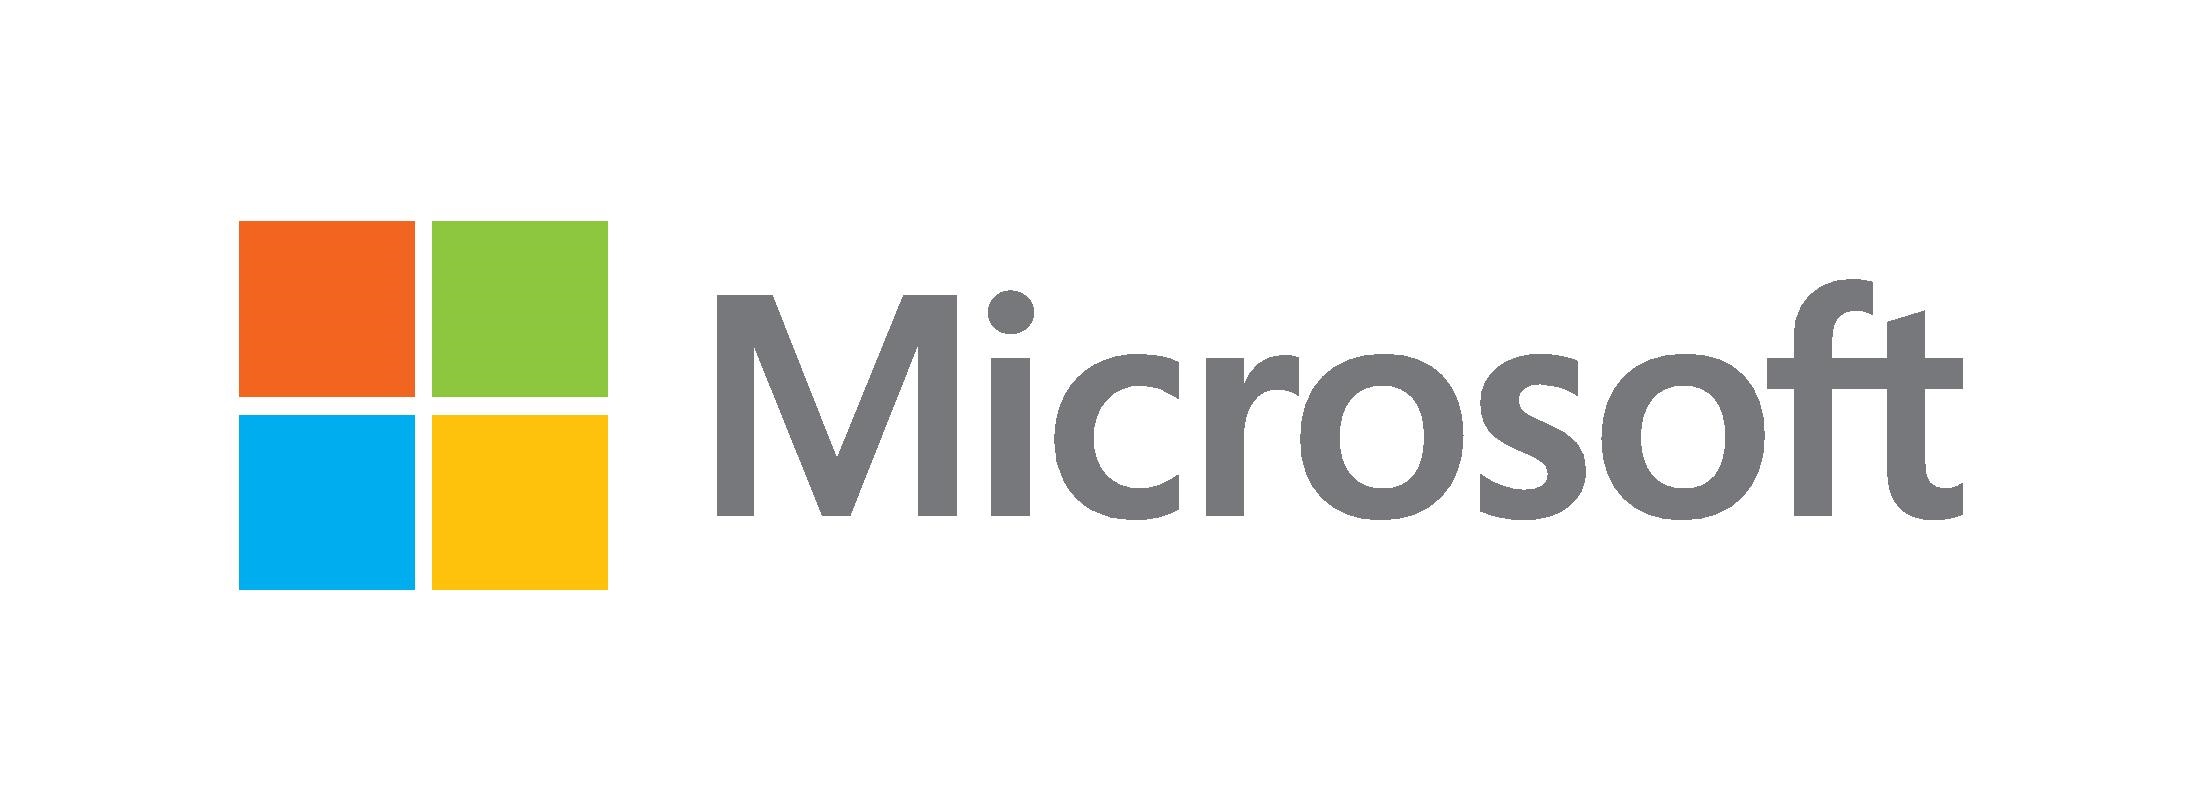 Microsoft: październik pełen premier